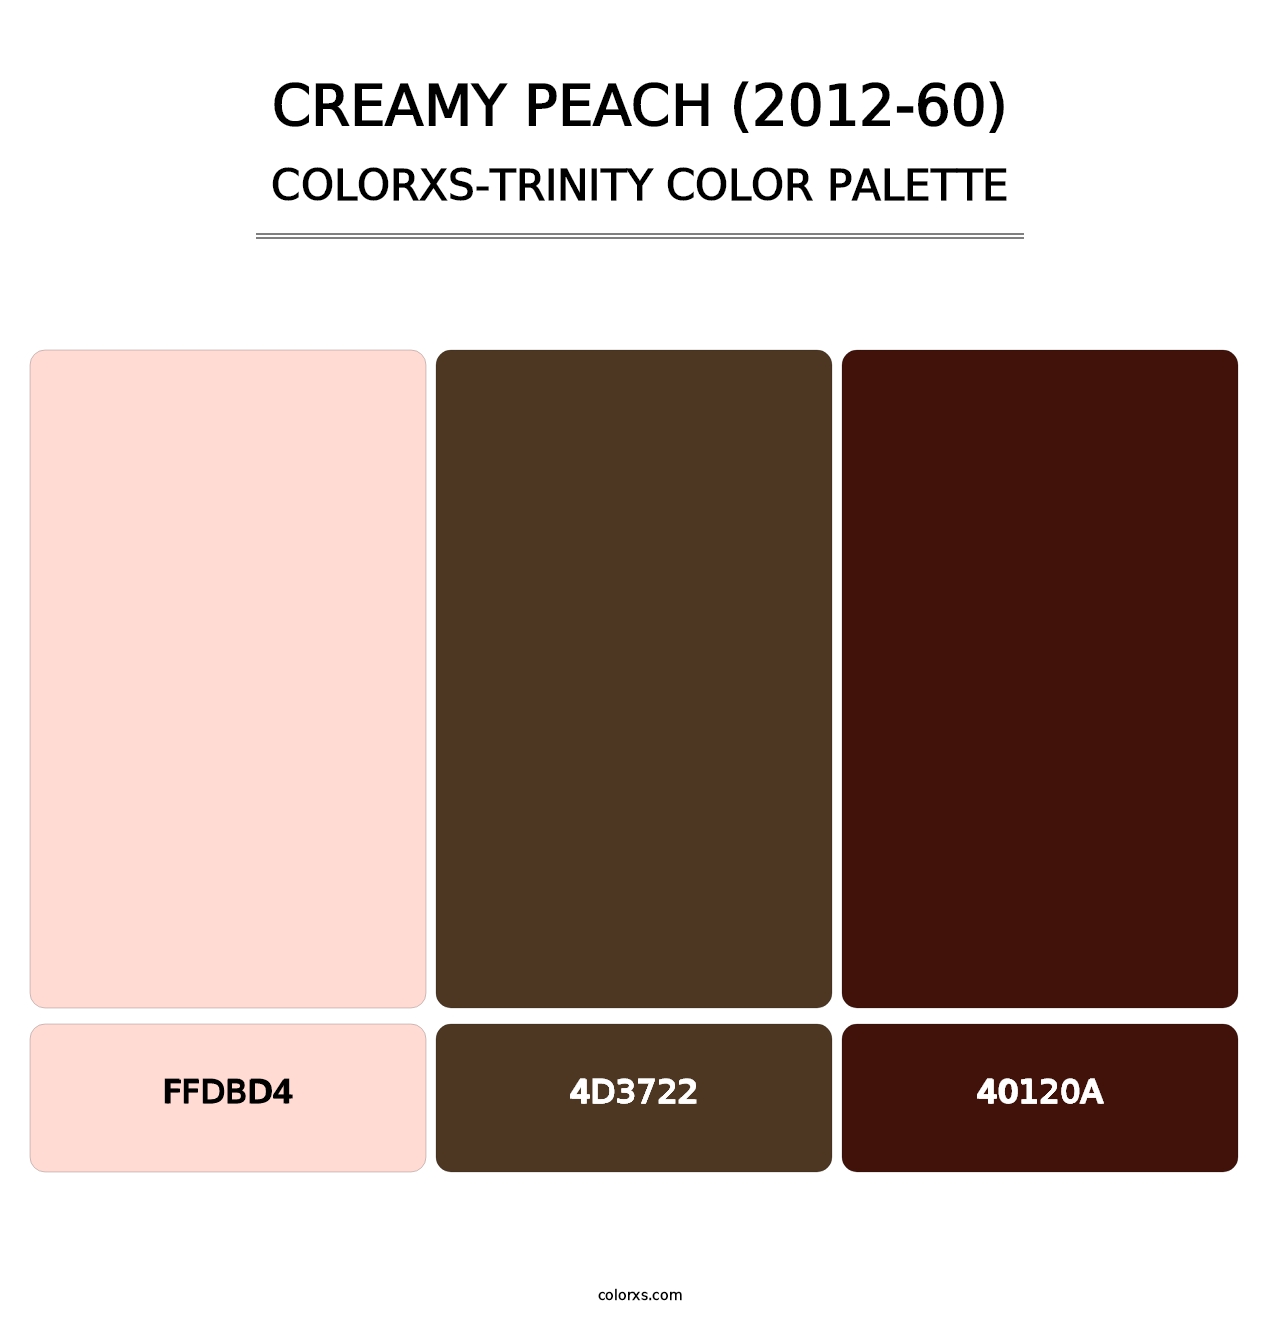 Creamy Peach (2012-60) - Colorxs Trinity Palette